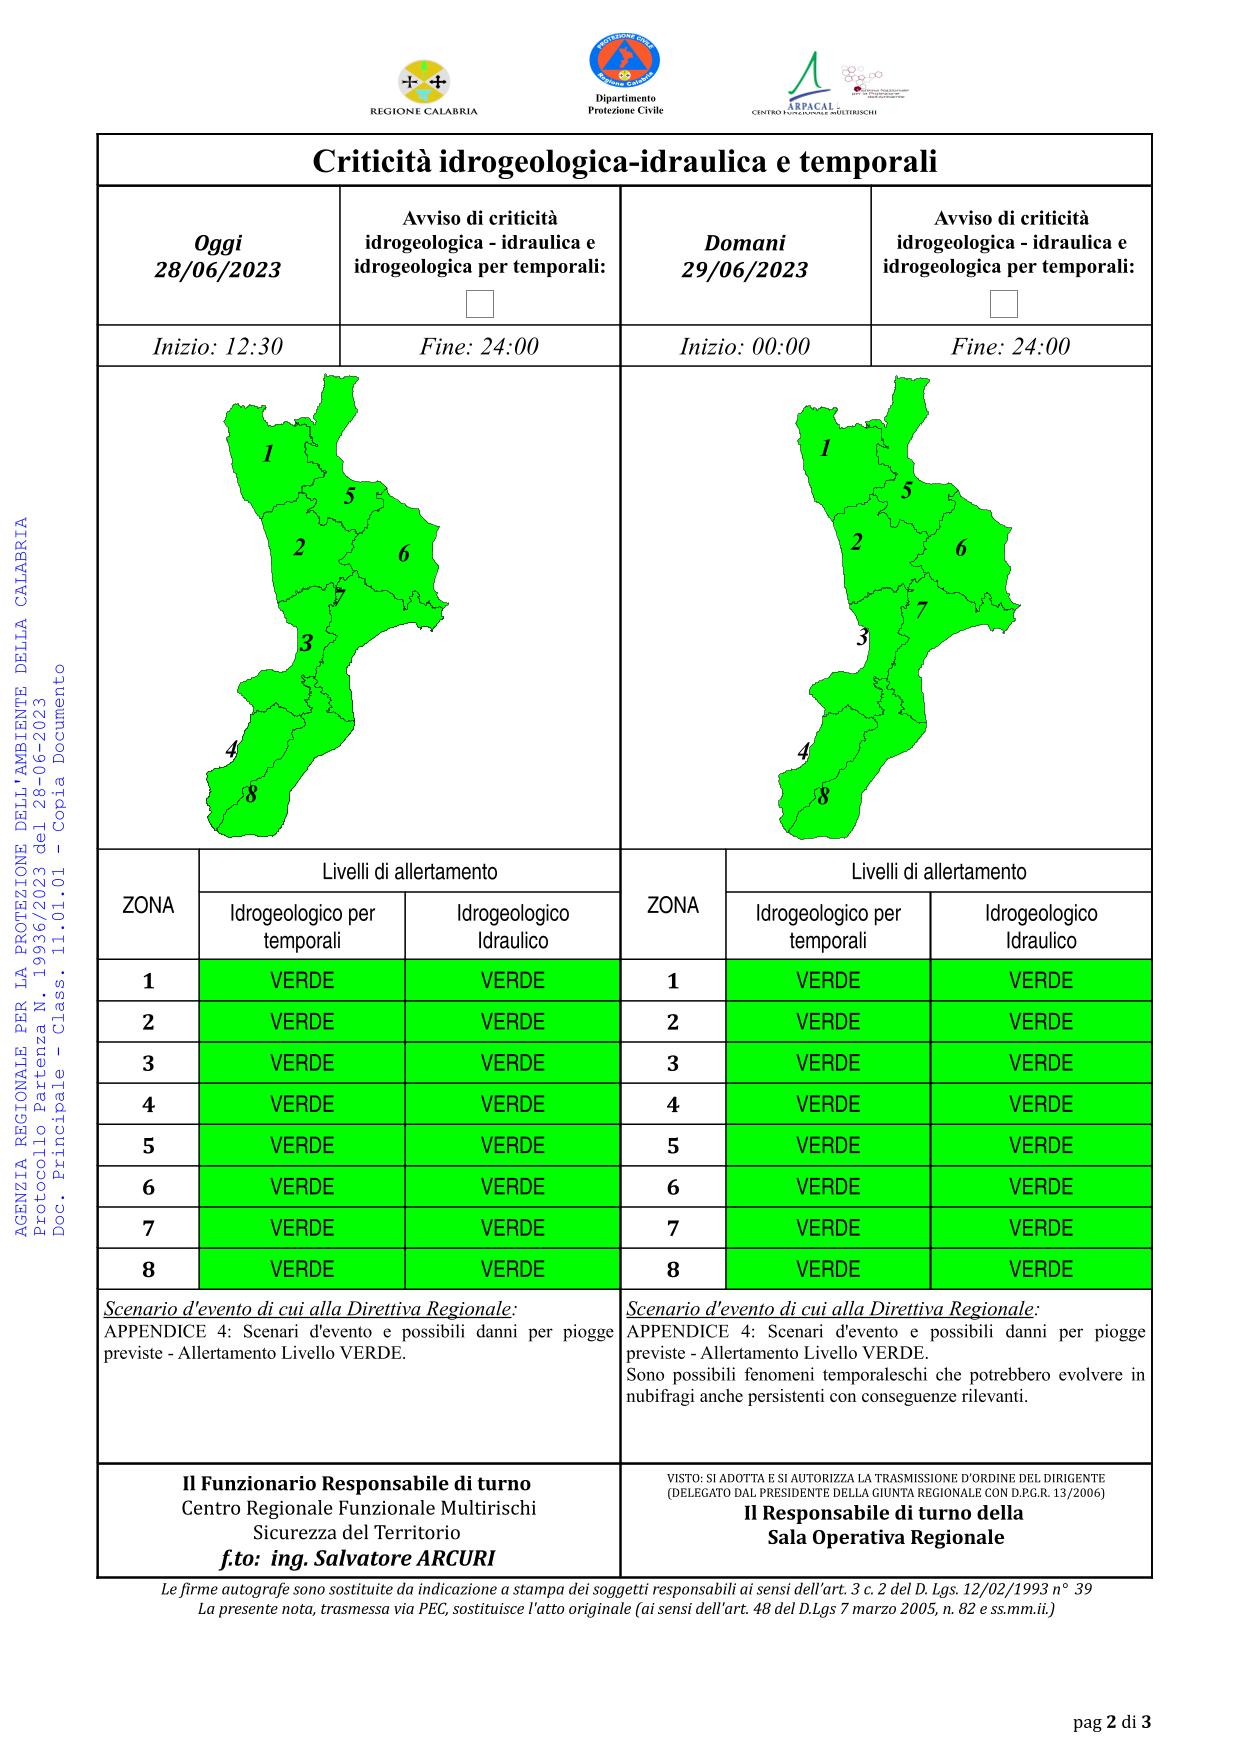 Criticità idrogeologica-idraulica e temporali in Calabria 28-06-2023